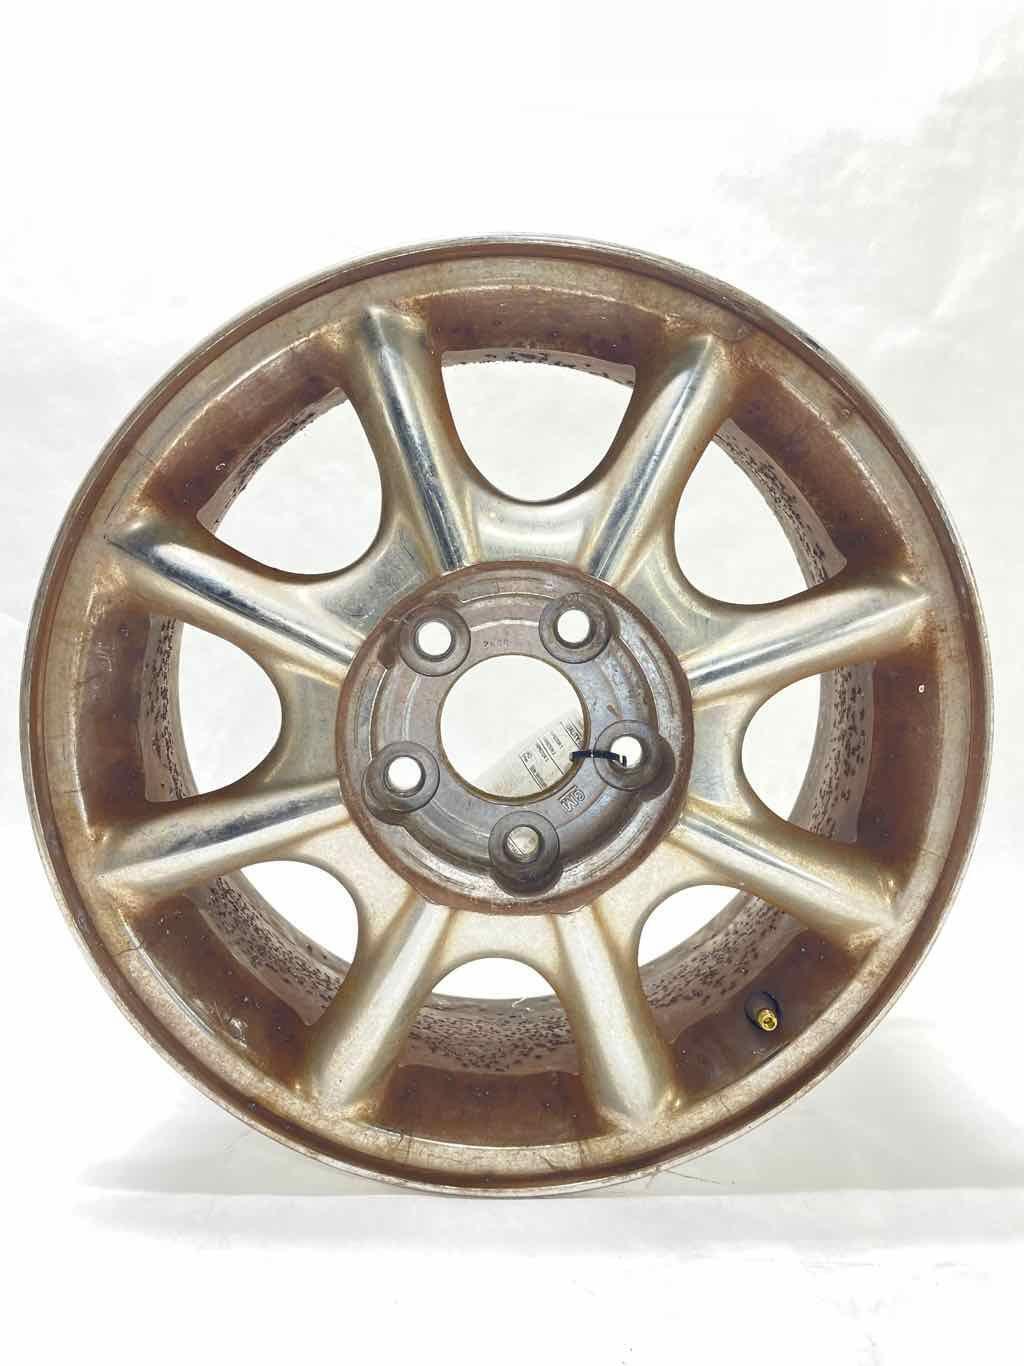 2002-2004 Buick Rendezvous Wheel Rim 16x6.5 8 Spoke Chrome Clad Opt PY1 9594042